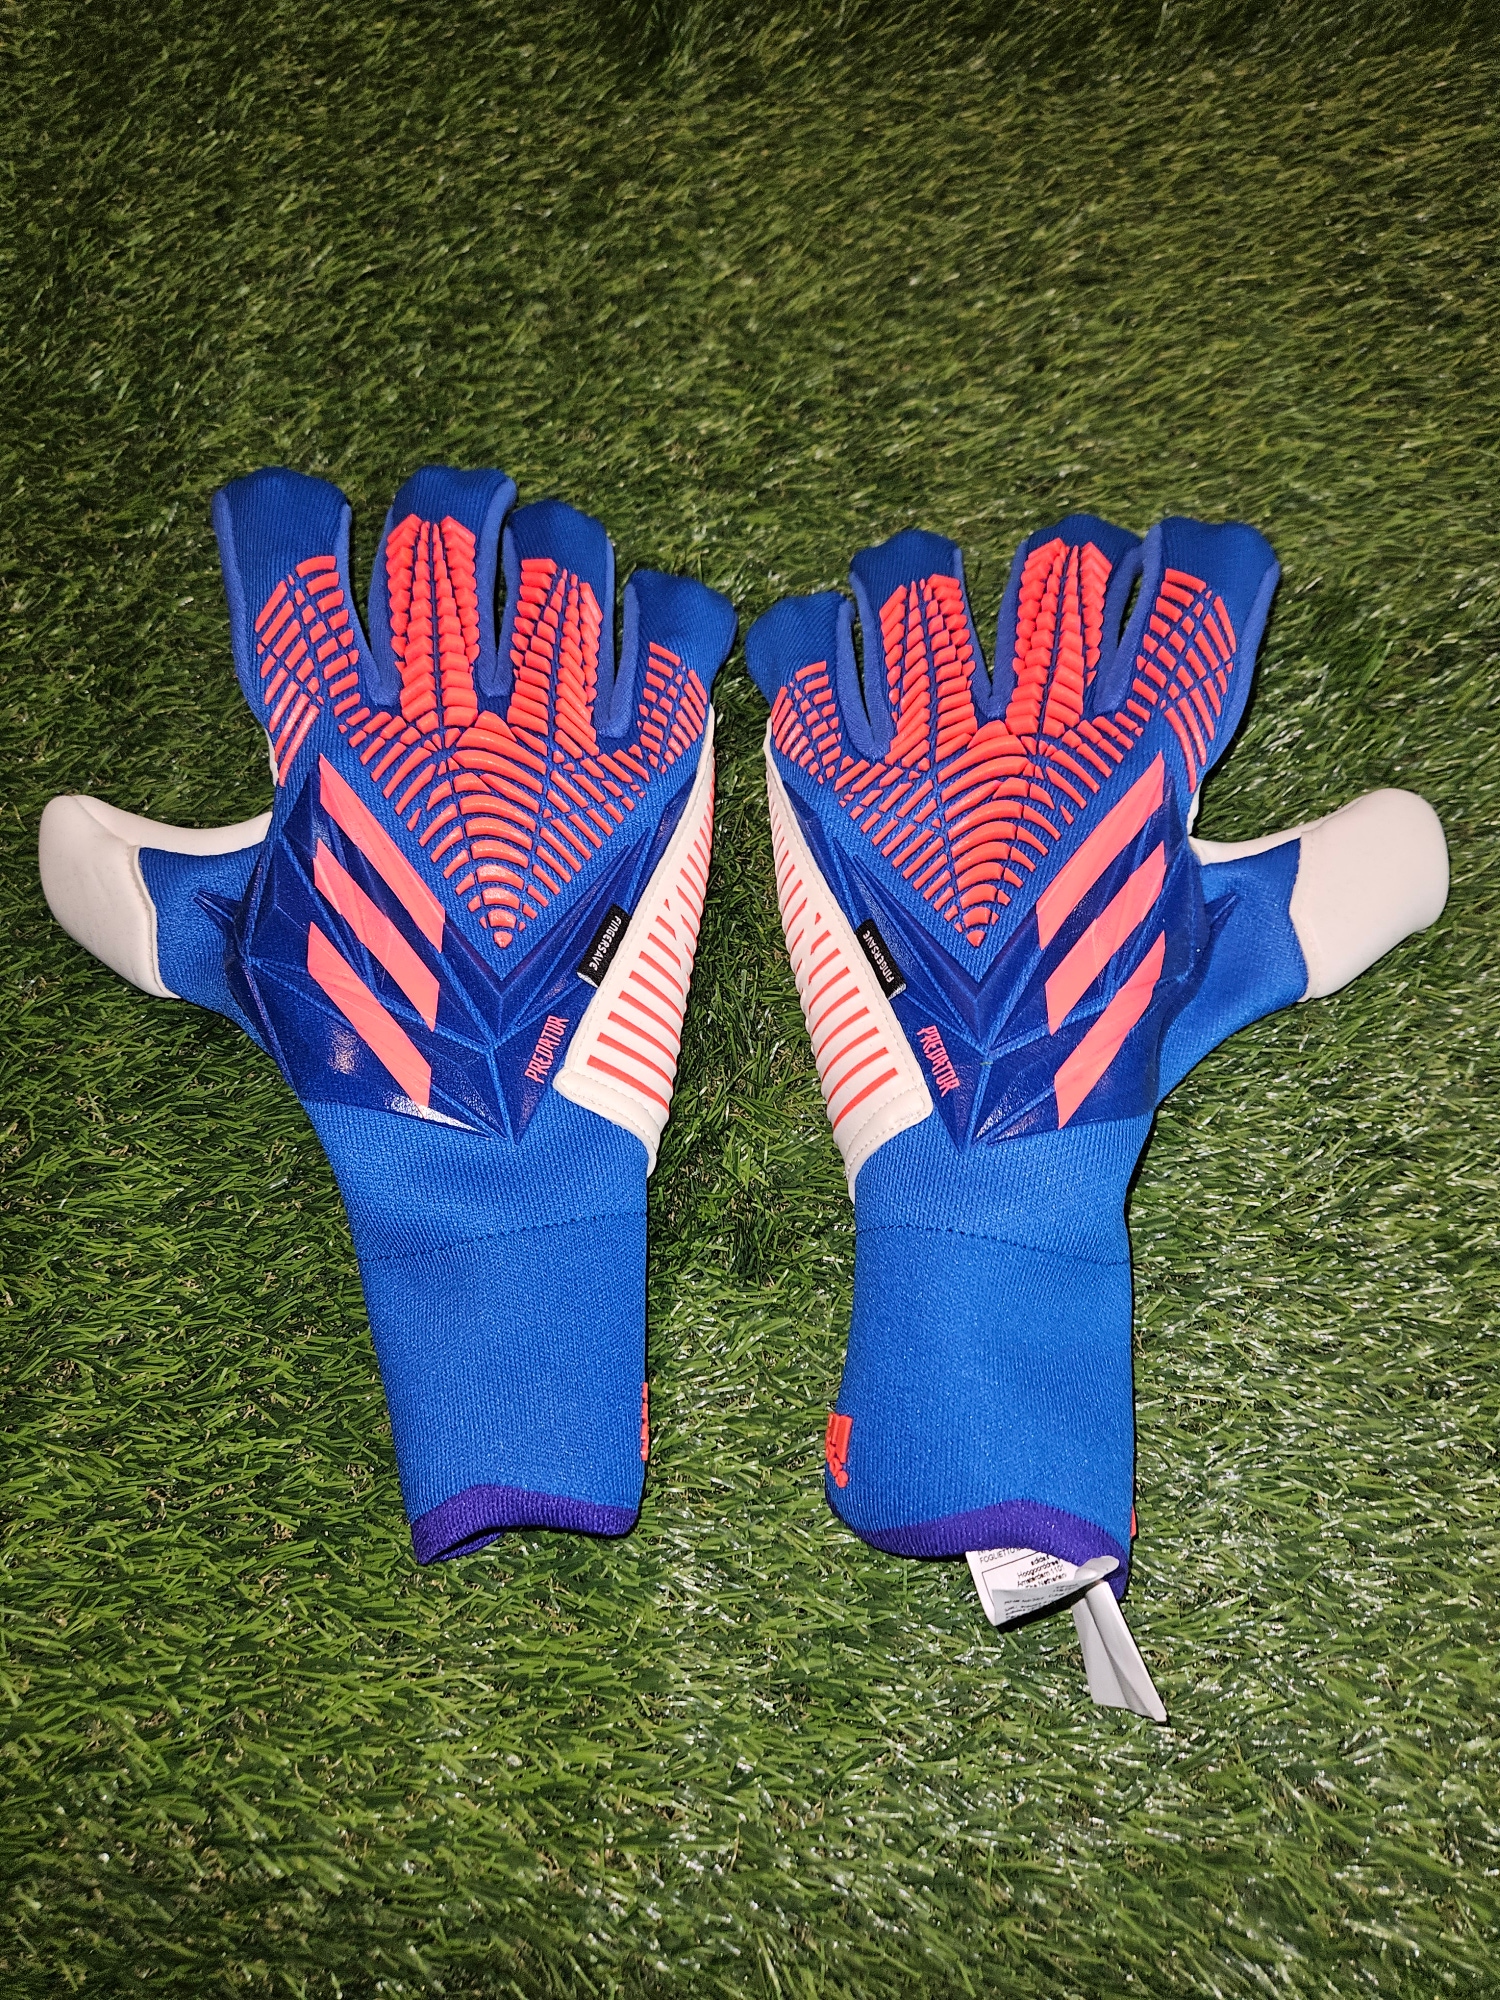 adidas Predator GL Pro Fingersave Goalkeeper Gloves